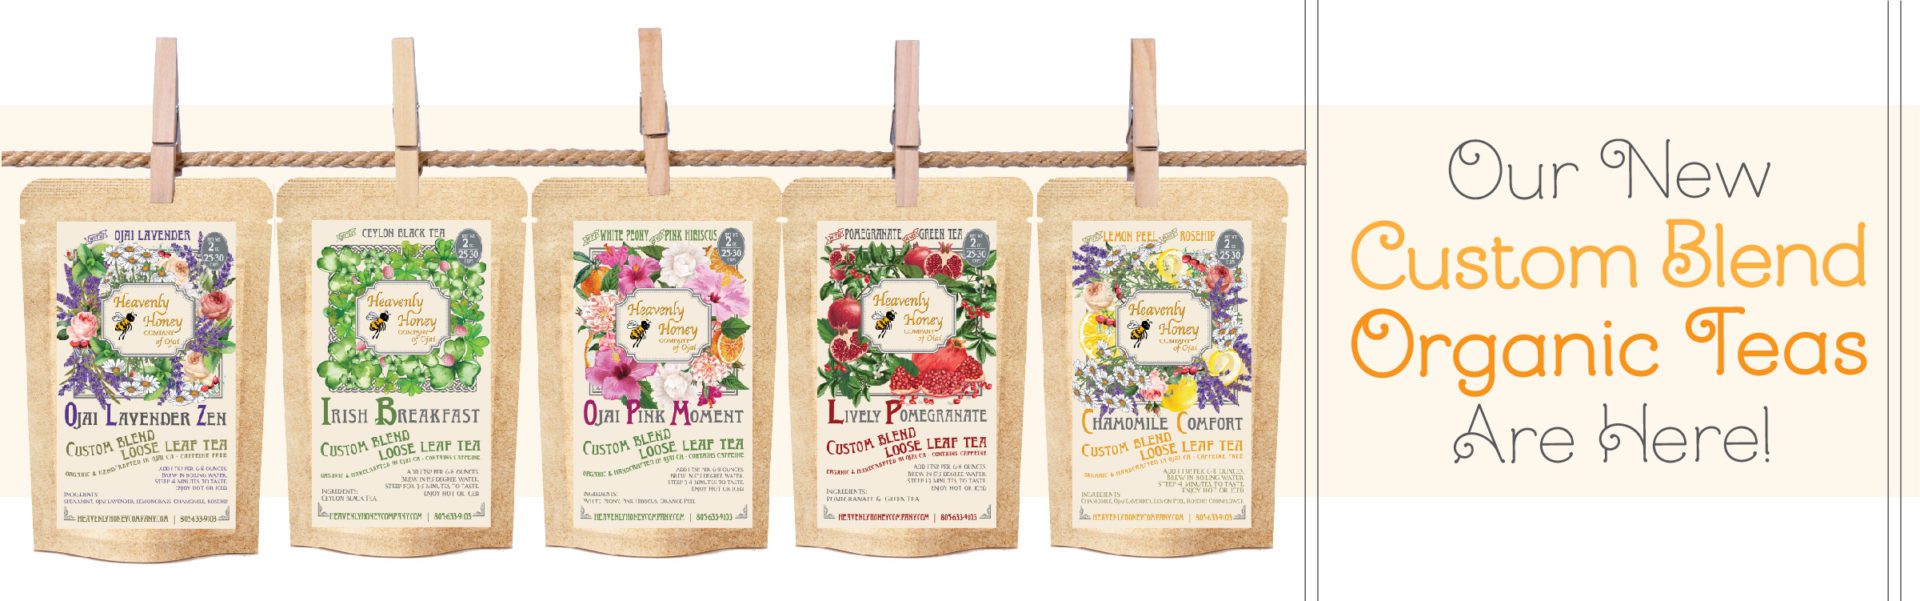 cutom blend organic teas